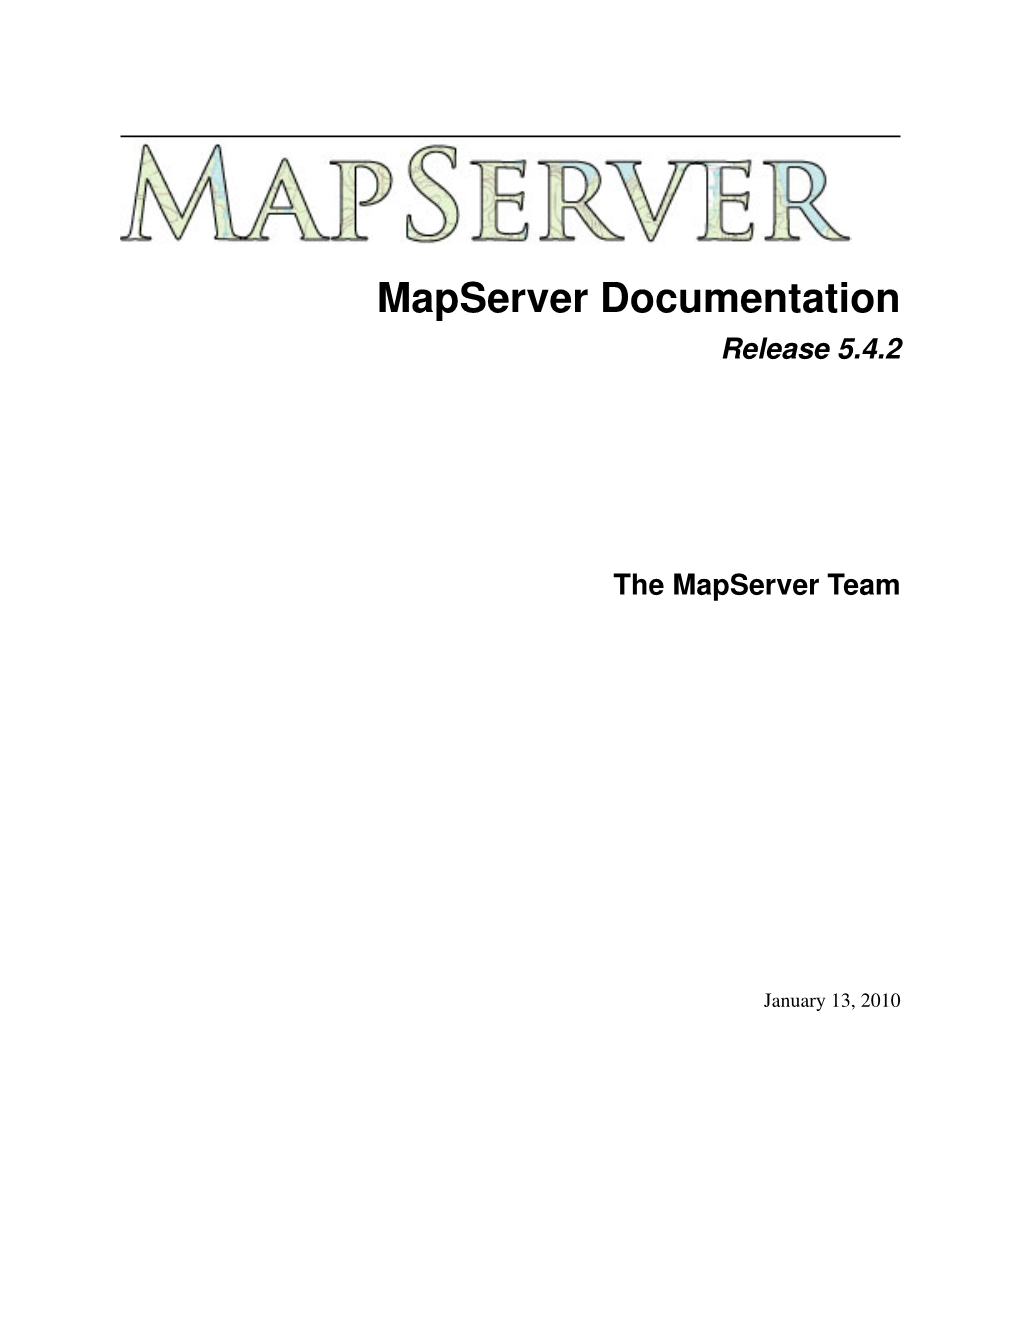 Mapserver Documentation Release 5.4.2